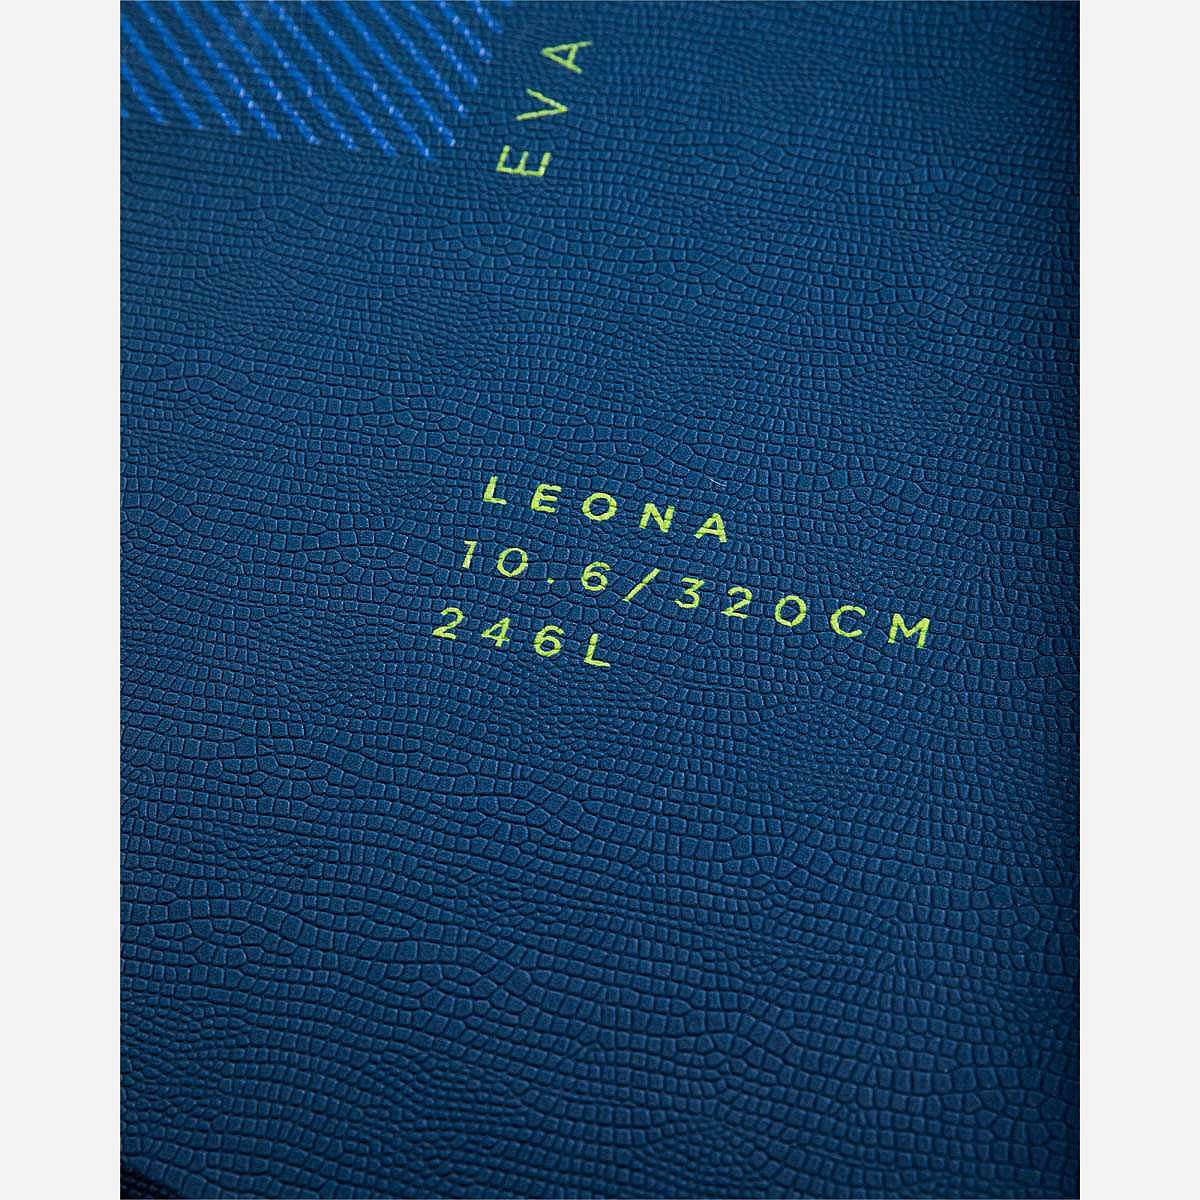 AN272430 Aero Leona SUP Board 10.6 Package